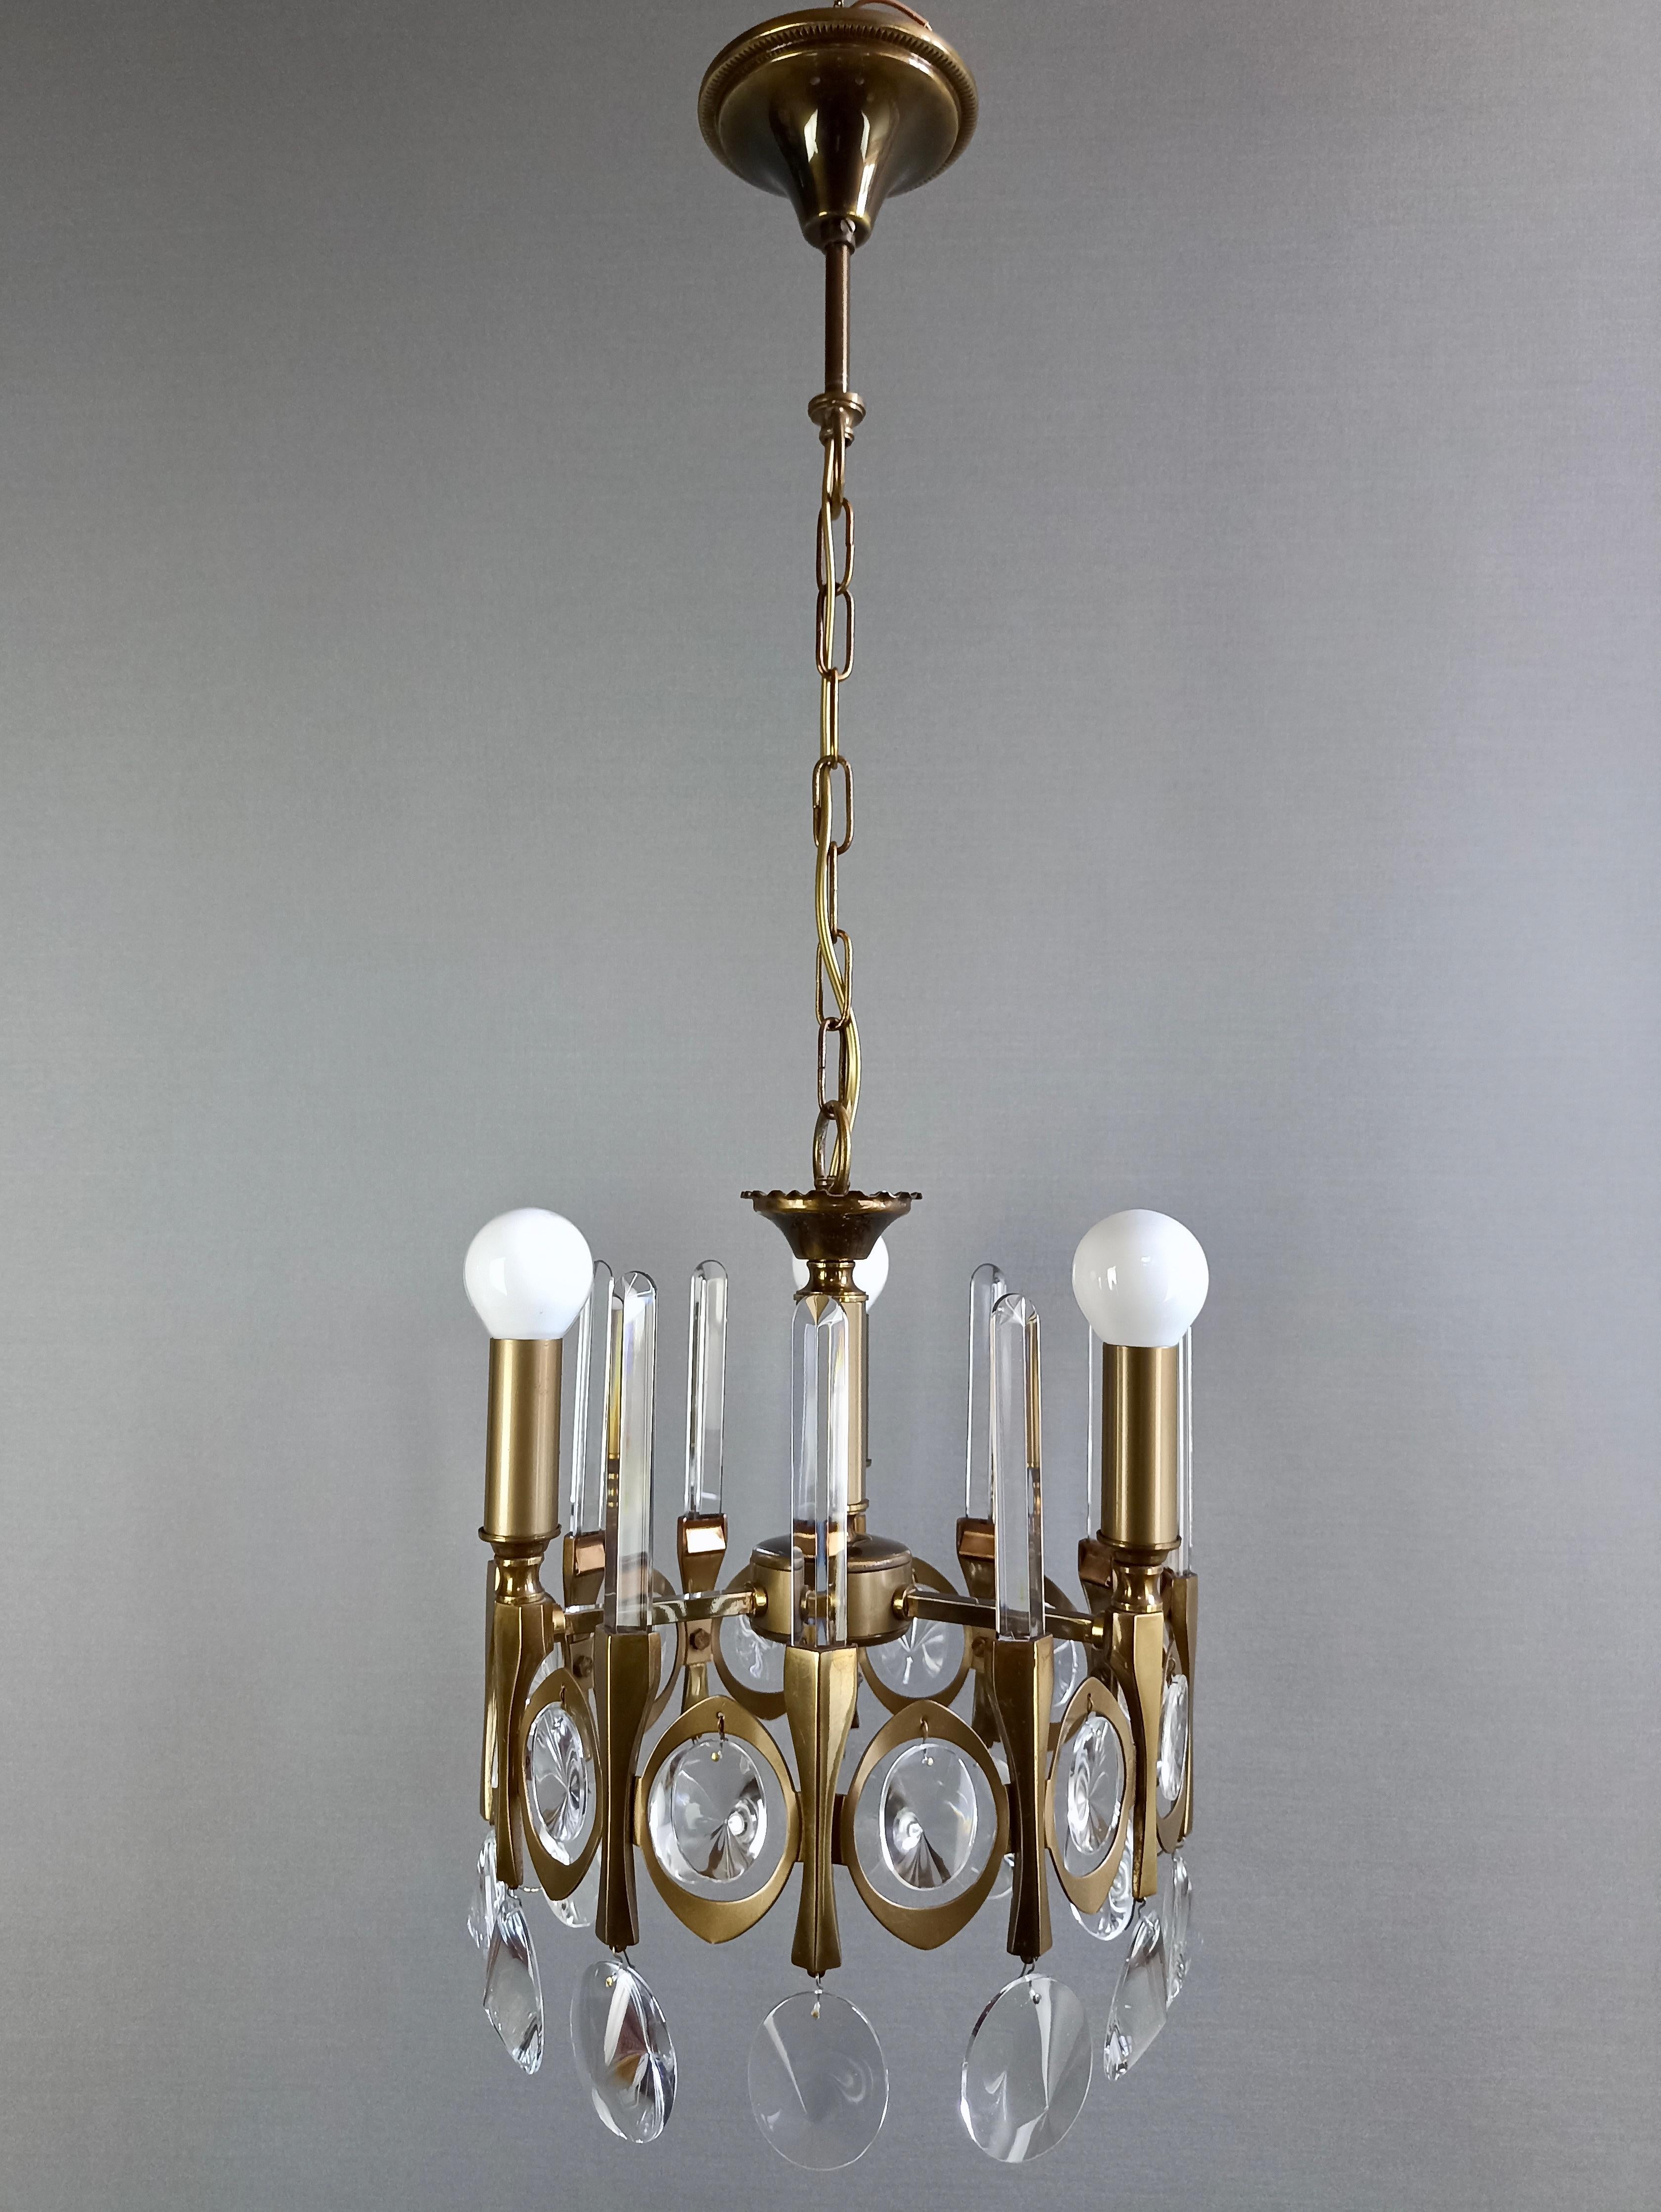 A splendid Gaetano Sciolari 1960s three-light chandelier in burnished brass from the 